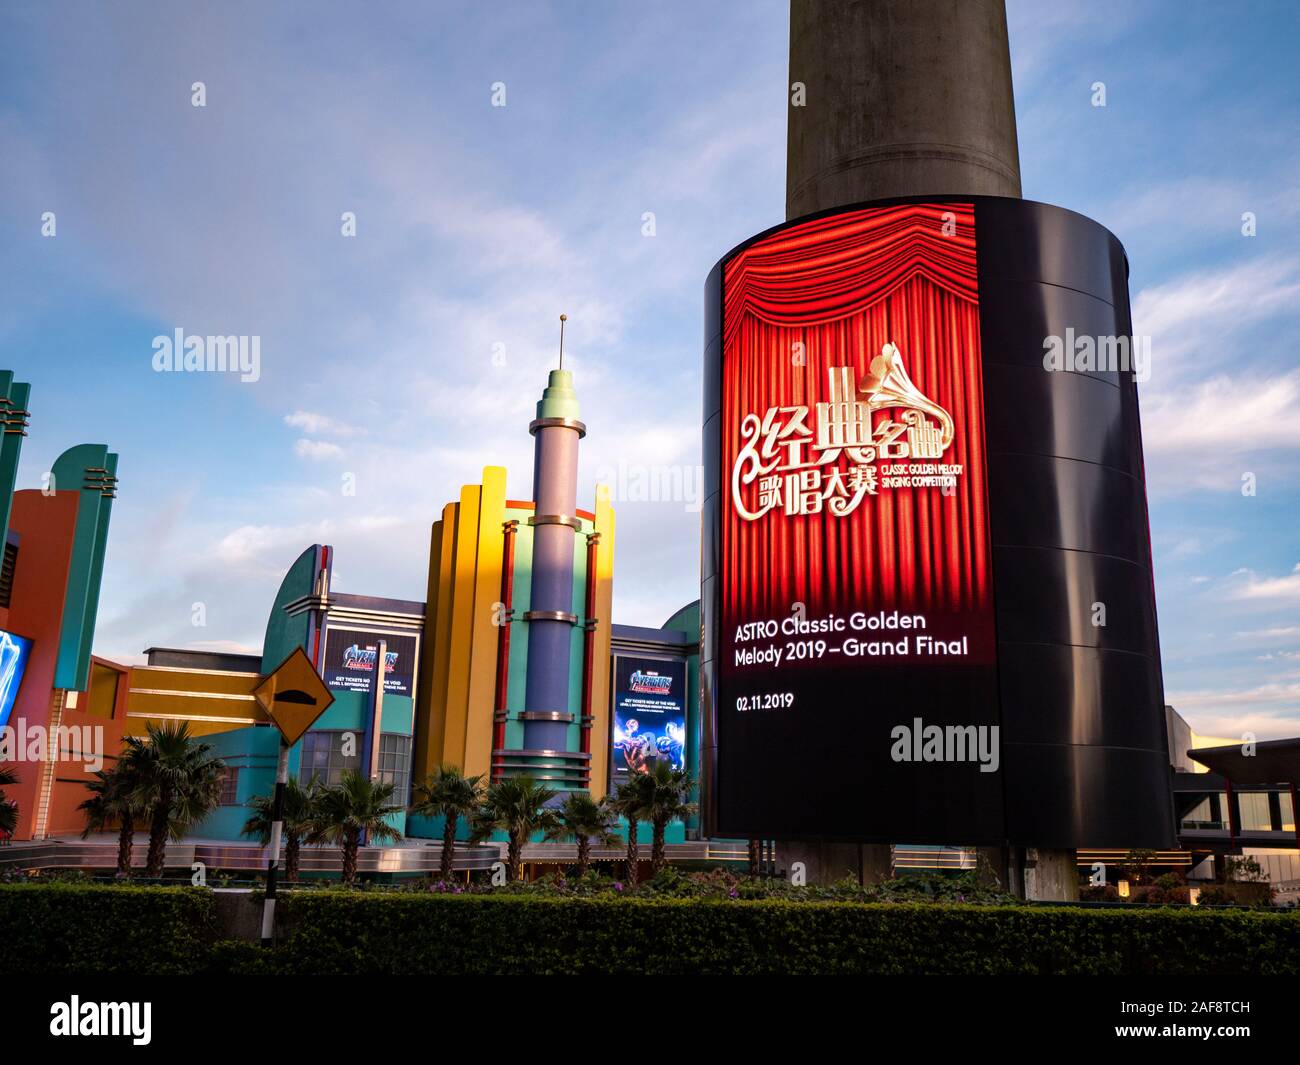 Genting, Malaysia - November 2019 Astro classic Golden Melody 2019 - Grand Final Werbung statue Nahaufnahme Arena der Stars, Resorts World Gen Stockfoto